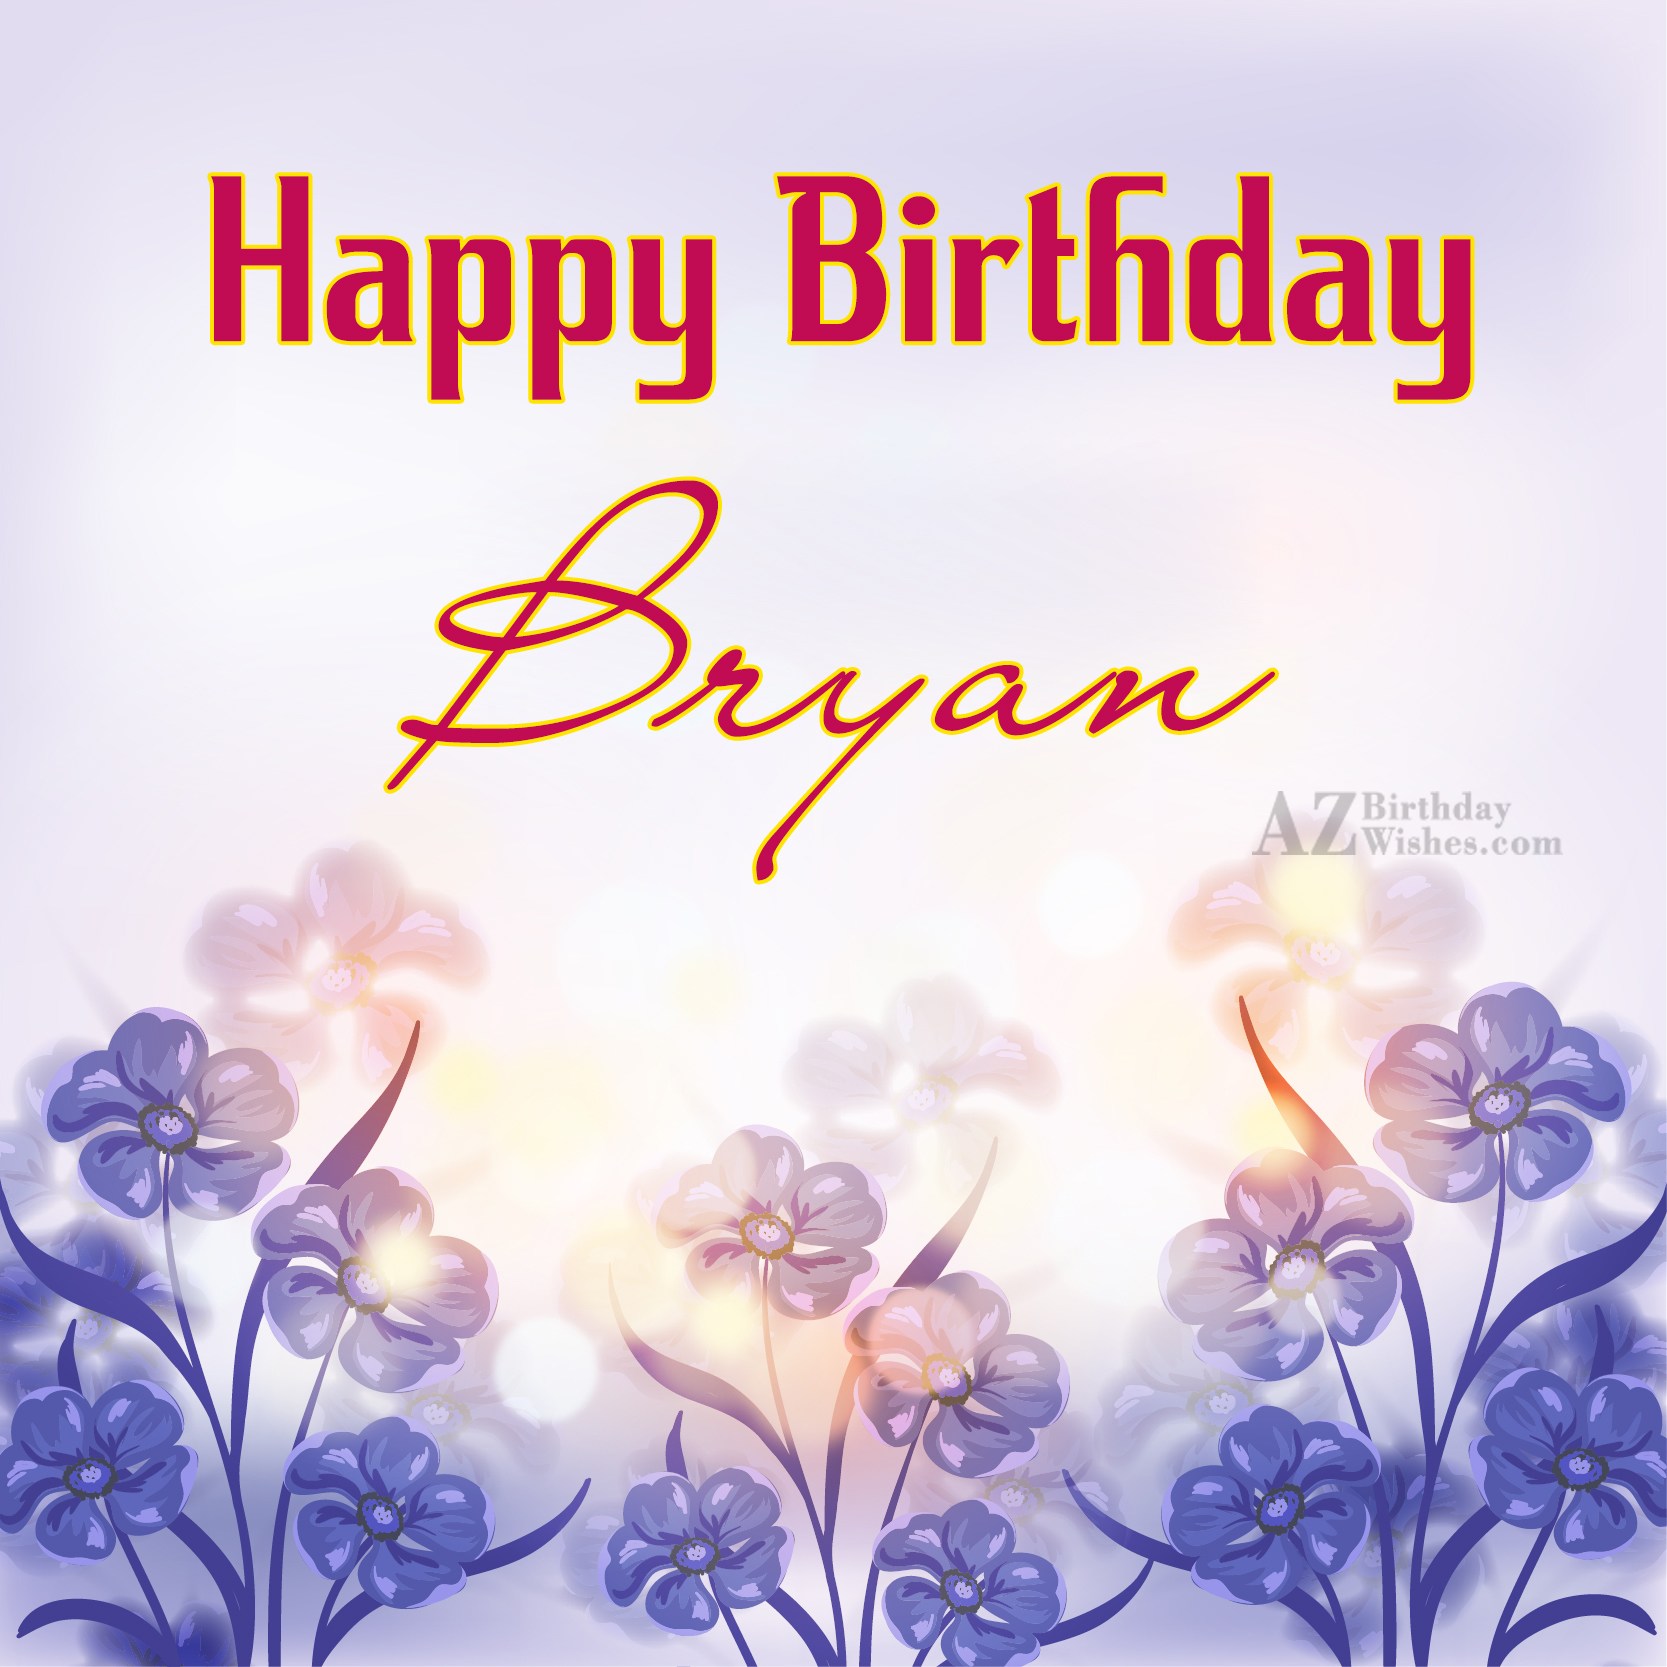 Happy Birthday Bryan.